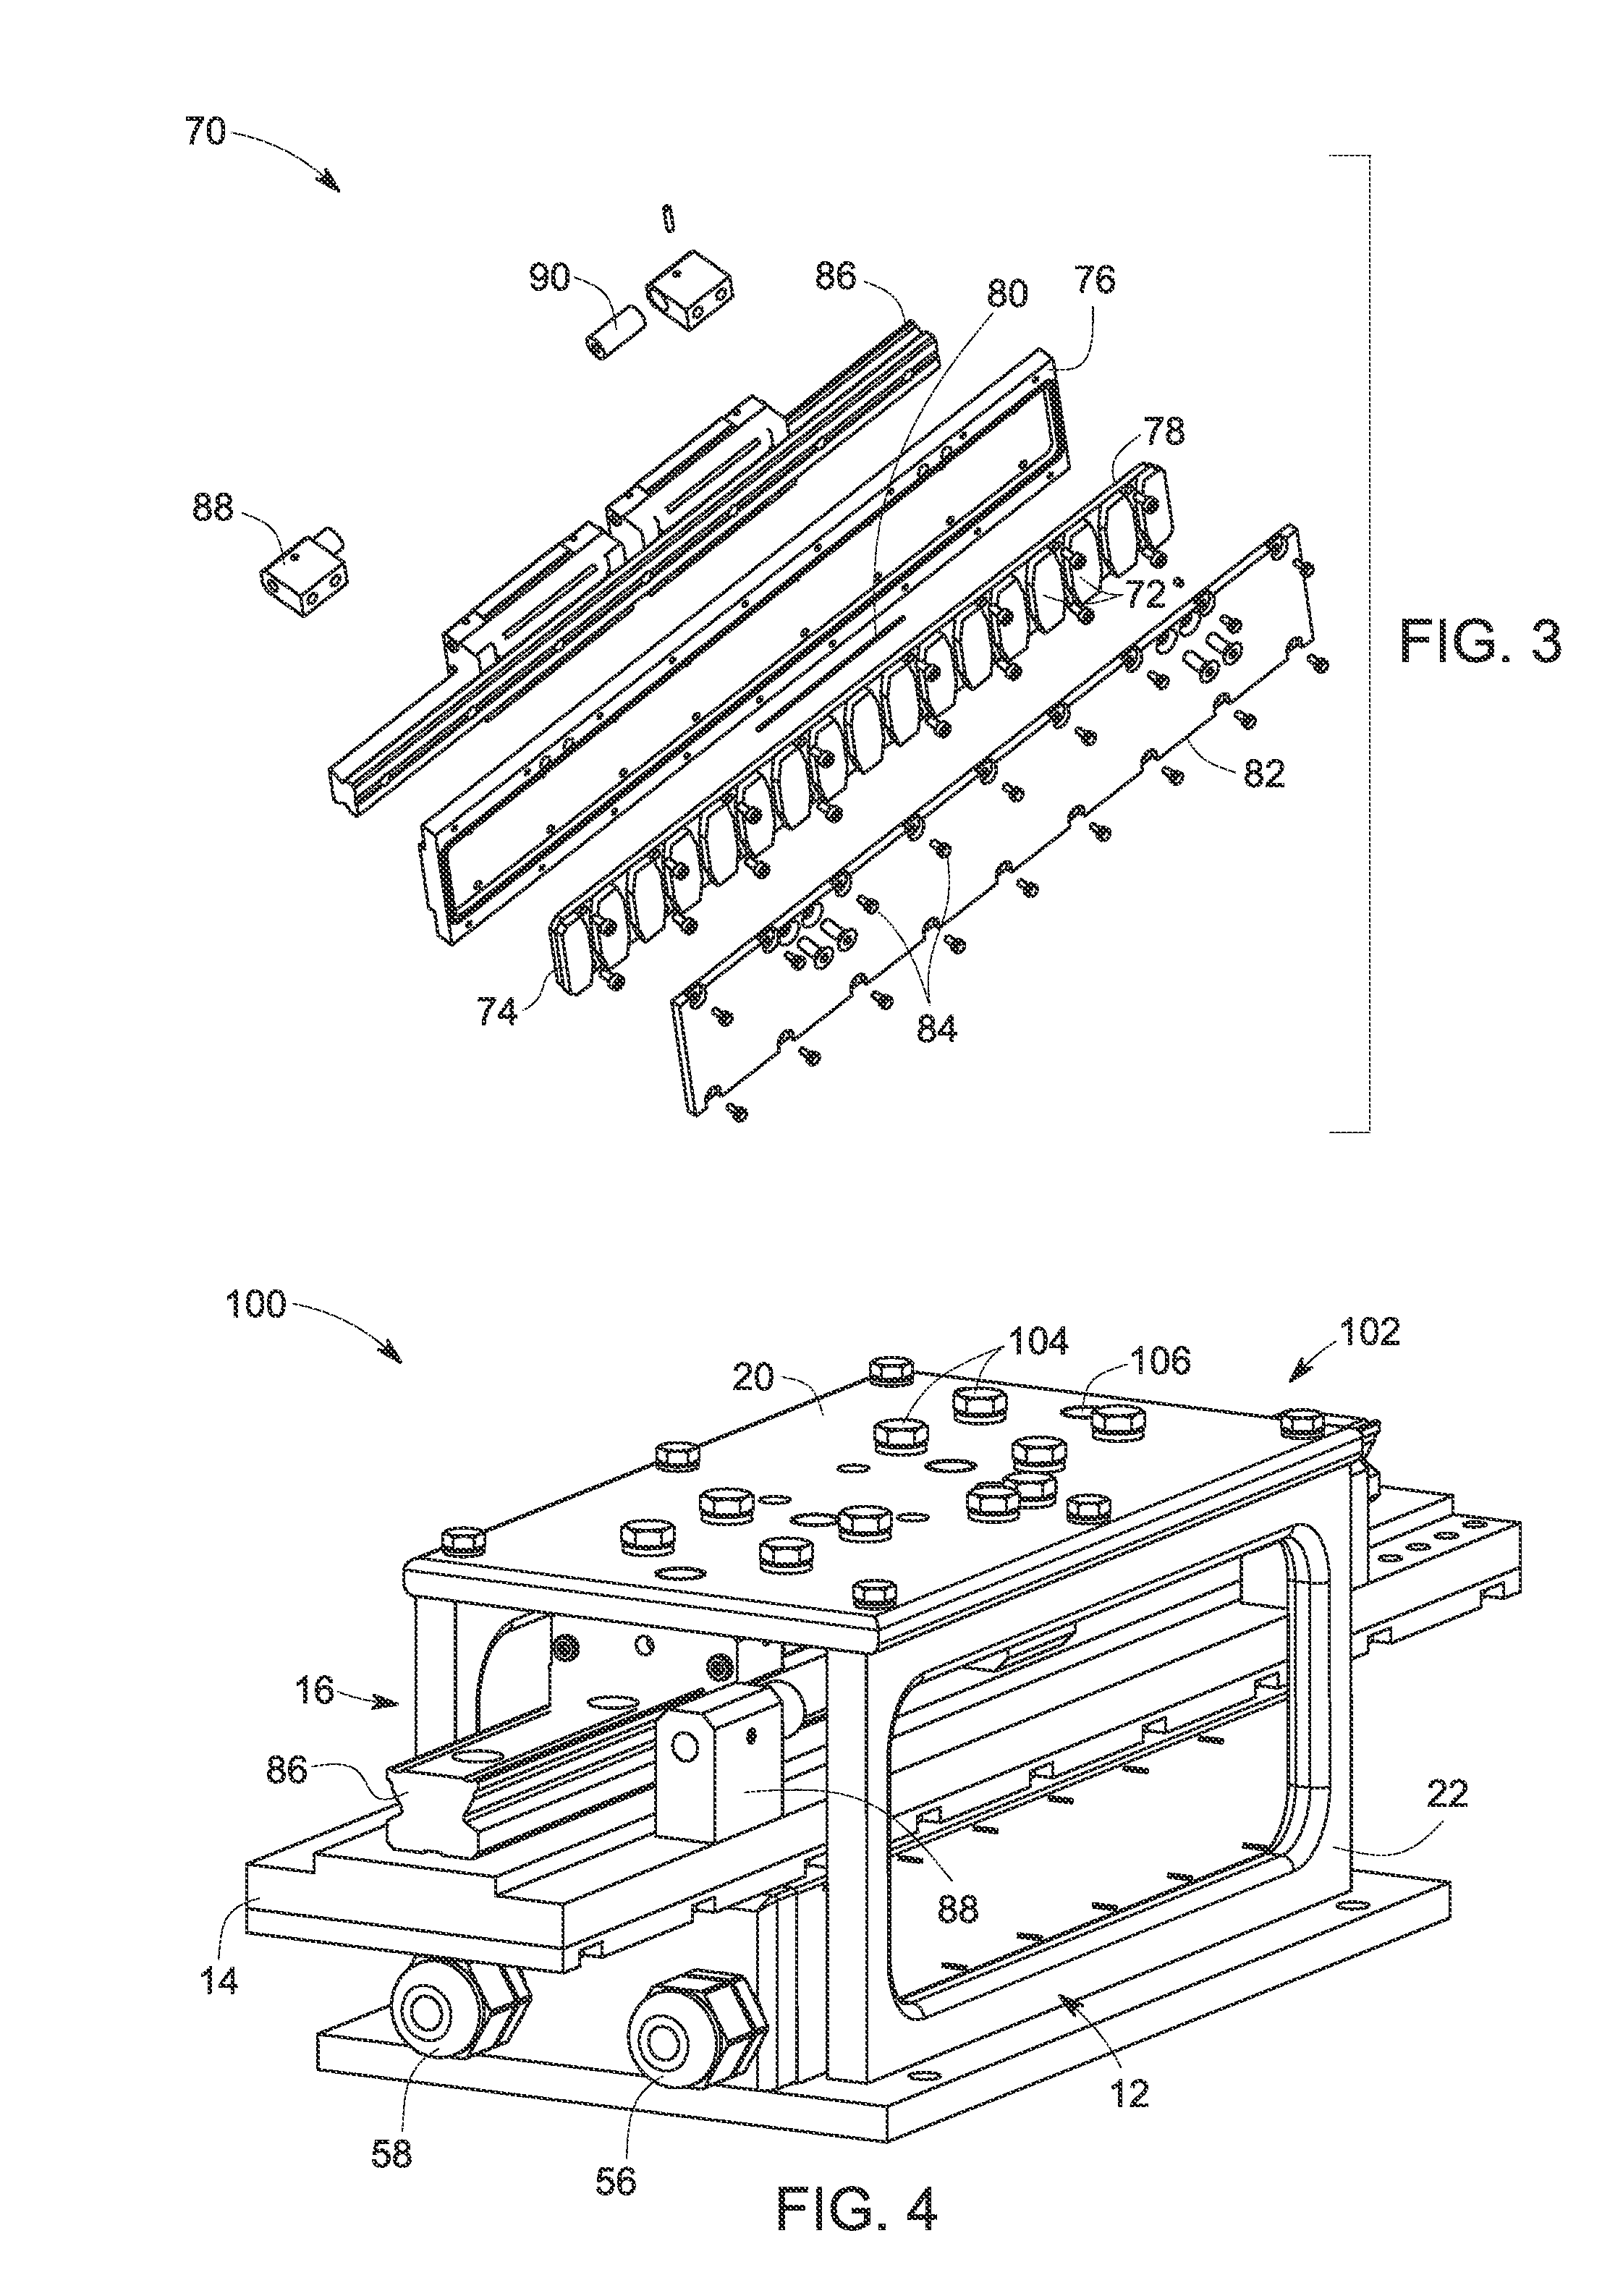 Linear motor system